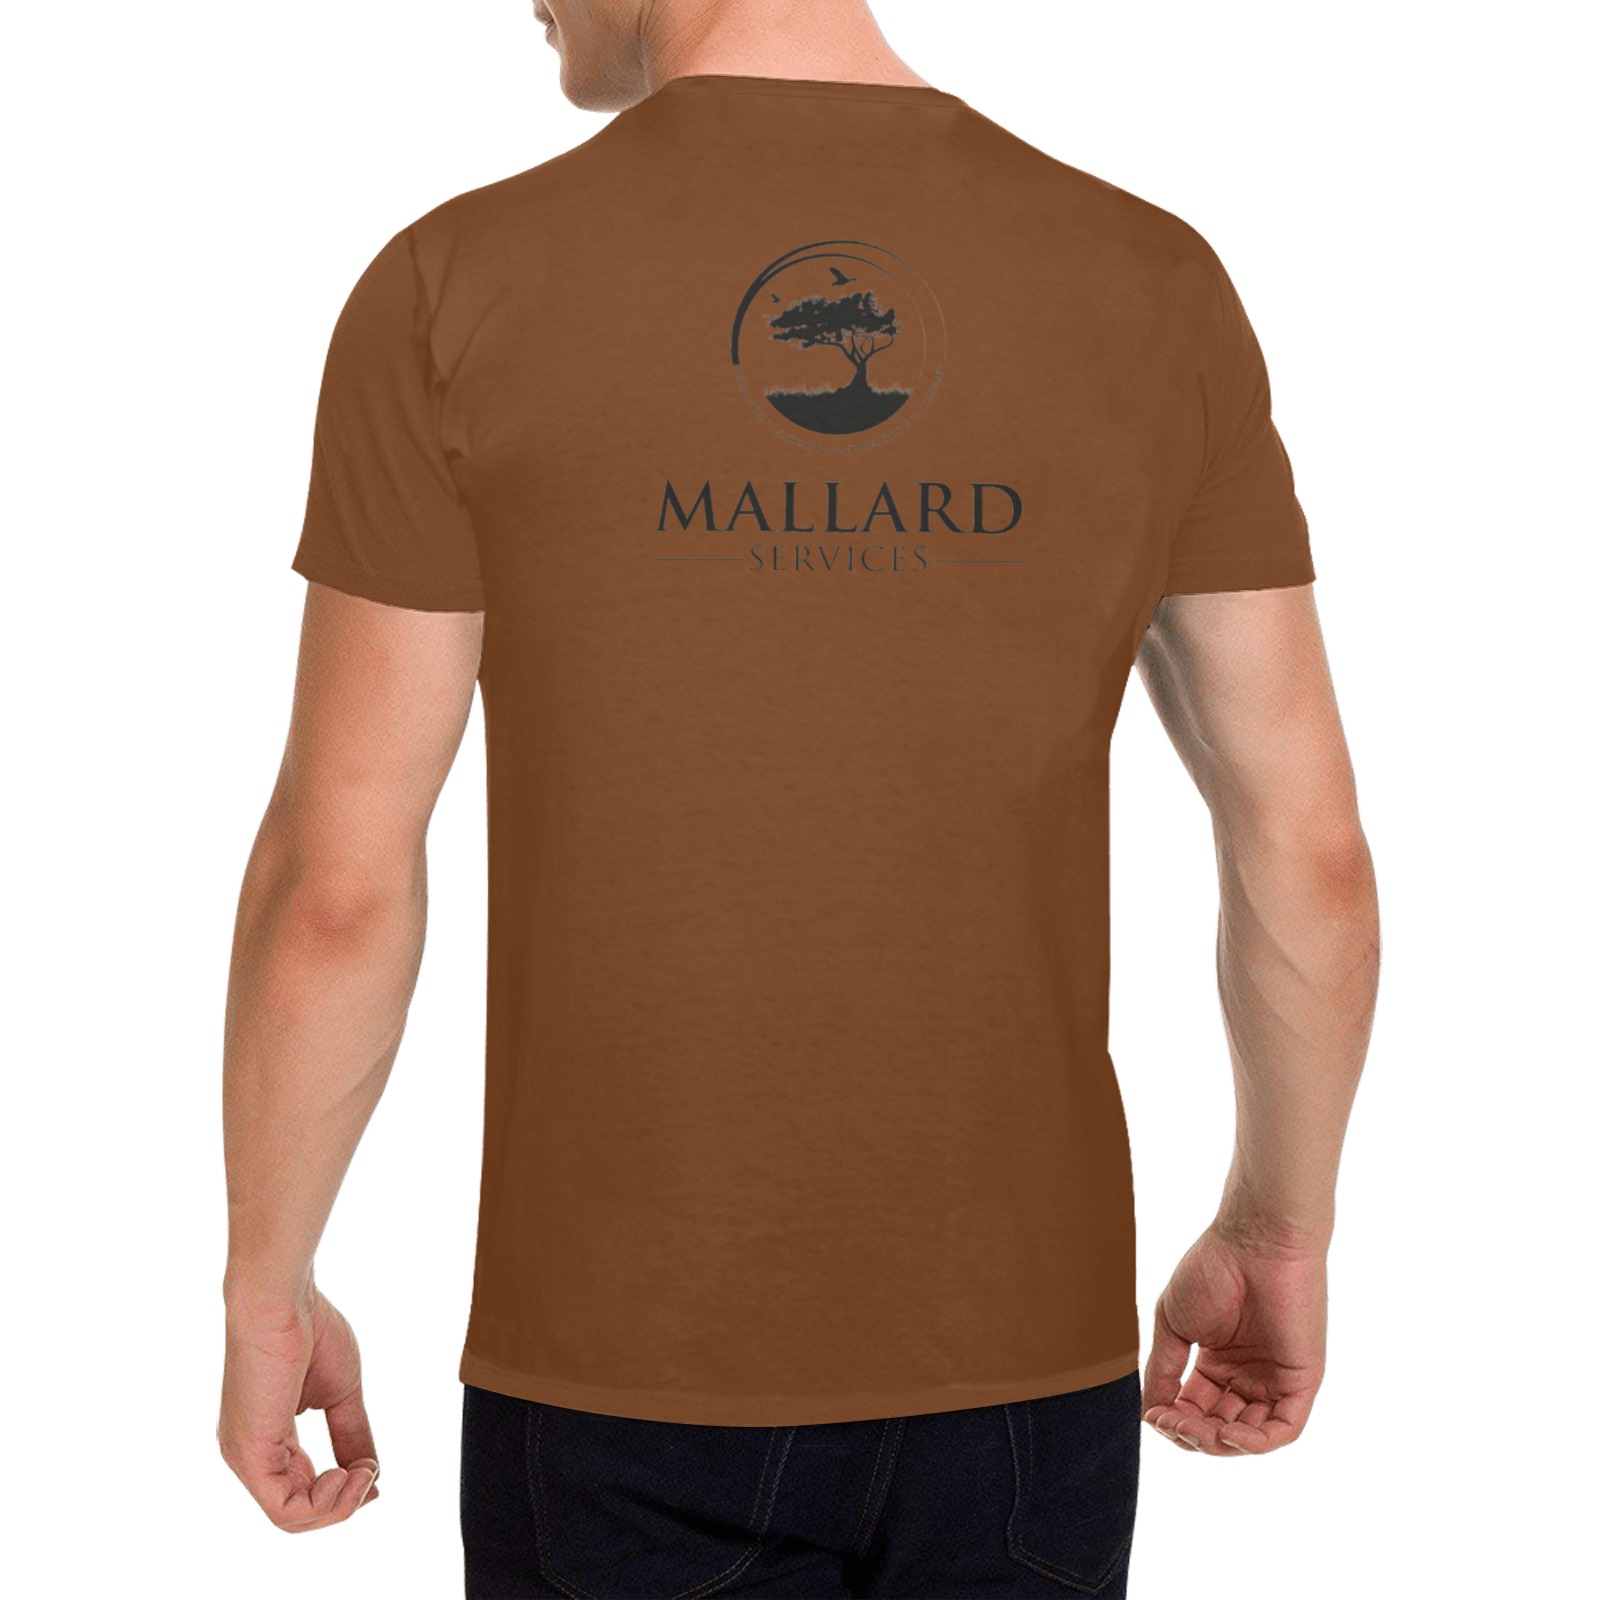 Mallard transparent Men's T-Shirt in USA Size (Two Sides Printing)